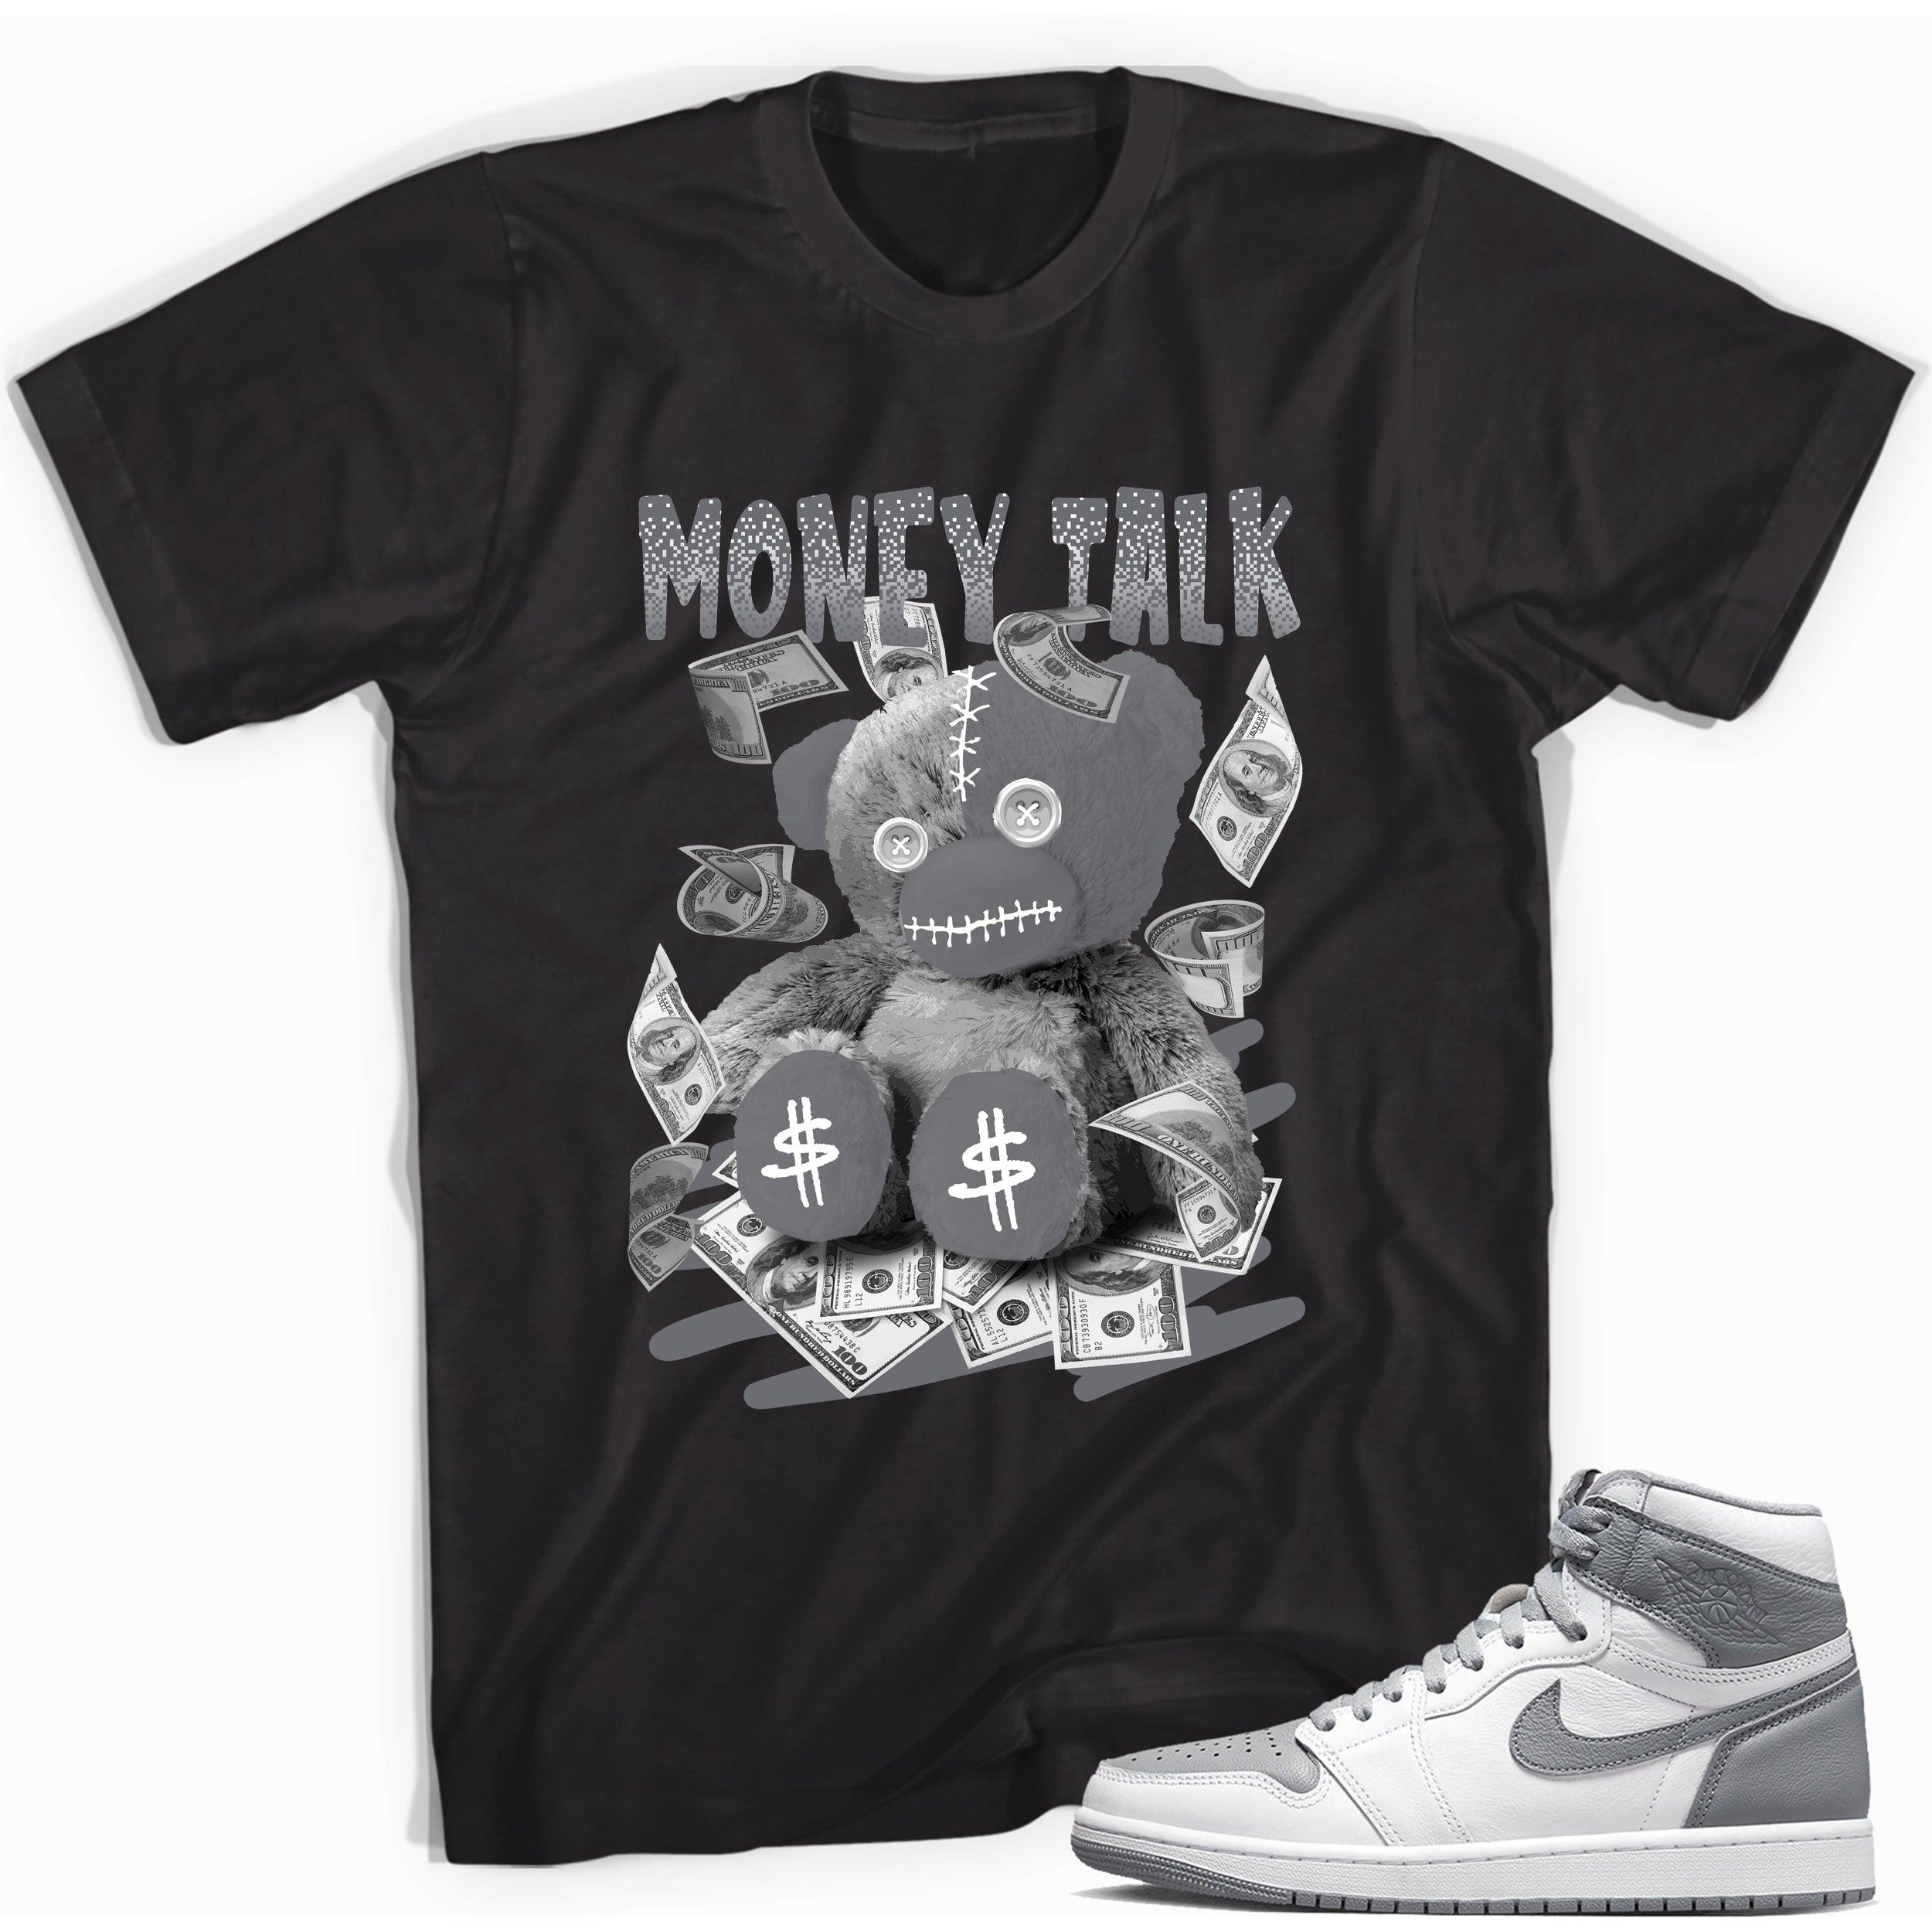 Money Talk Bear Sneaker Tee for Jordan 1s photo